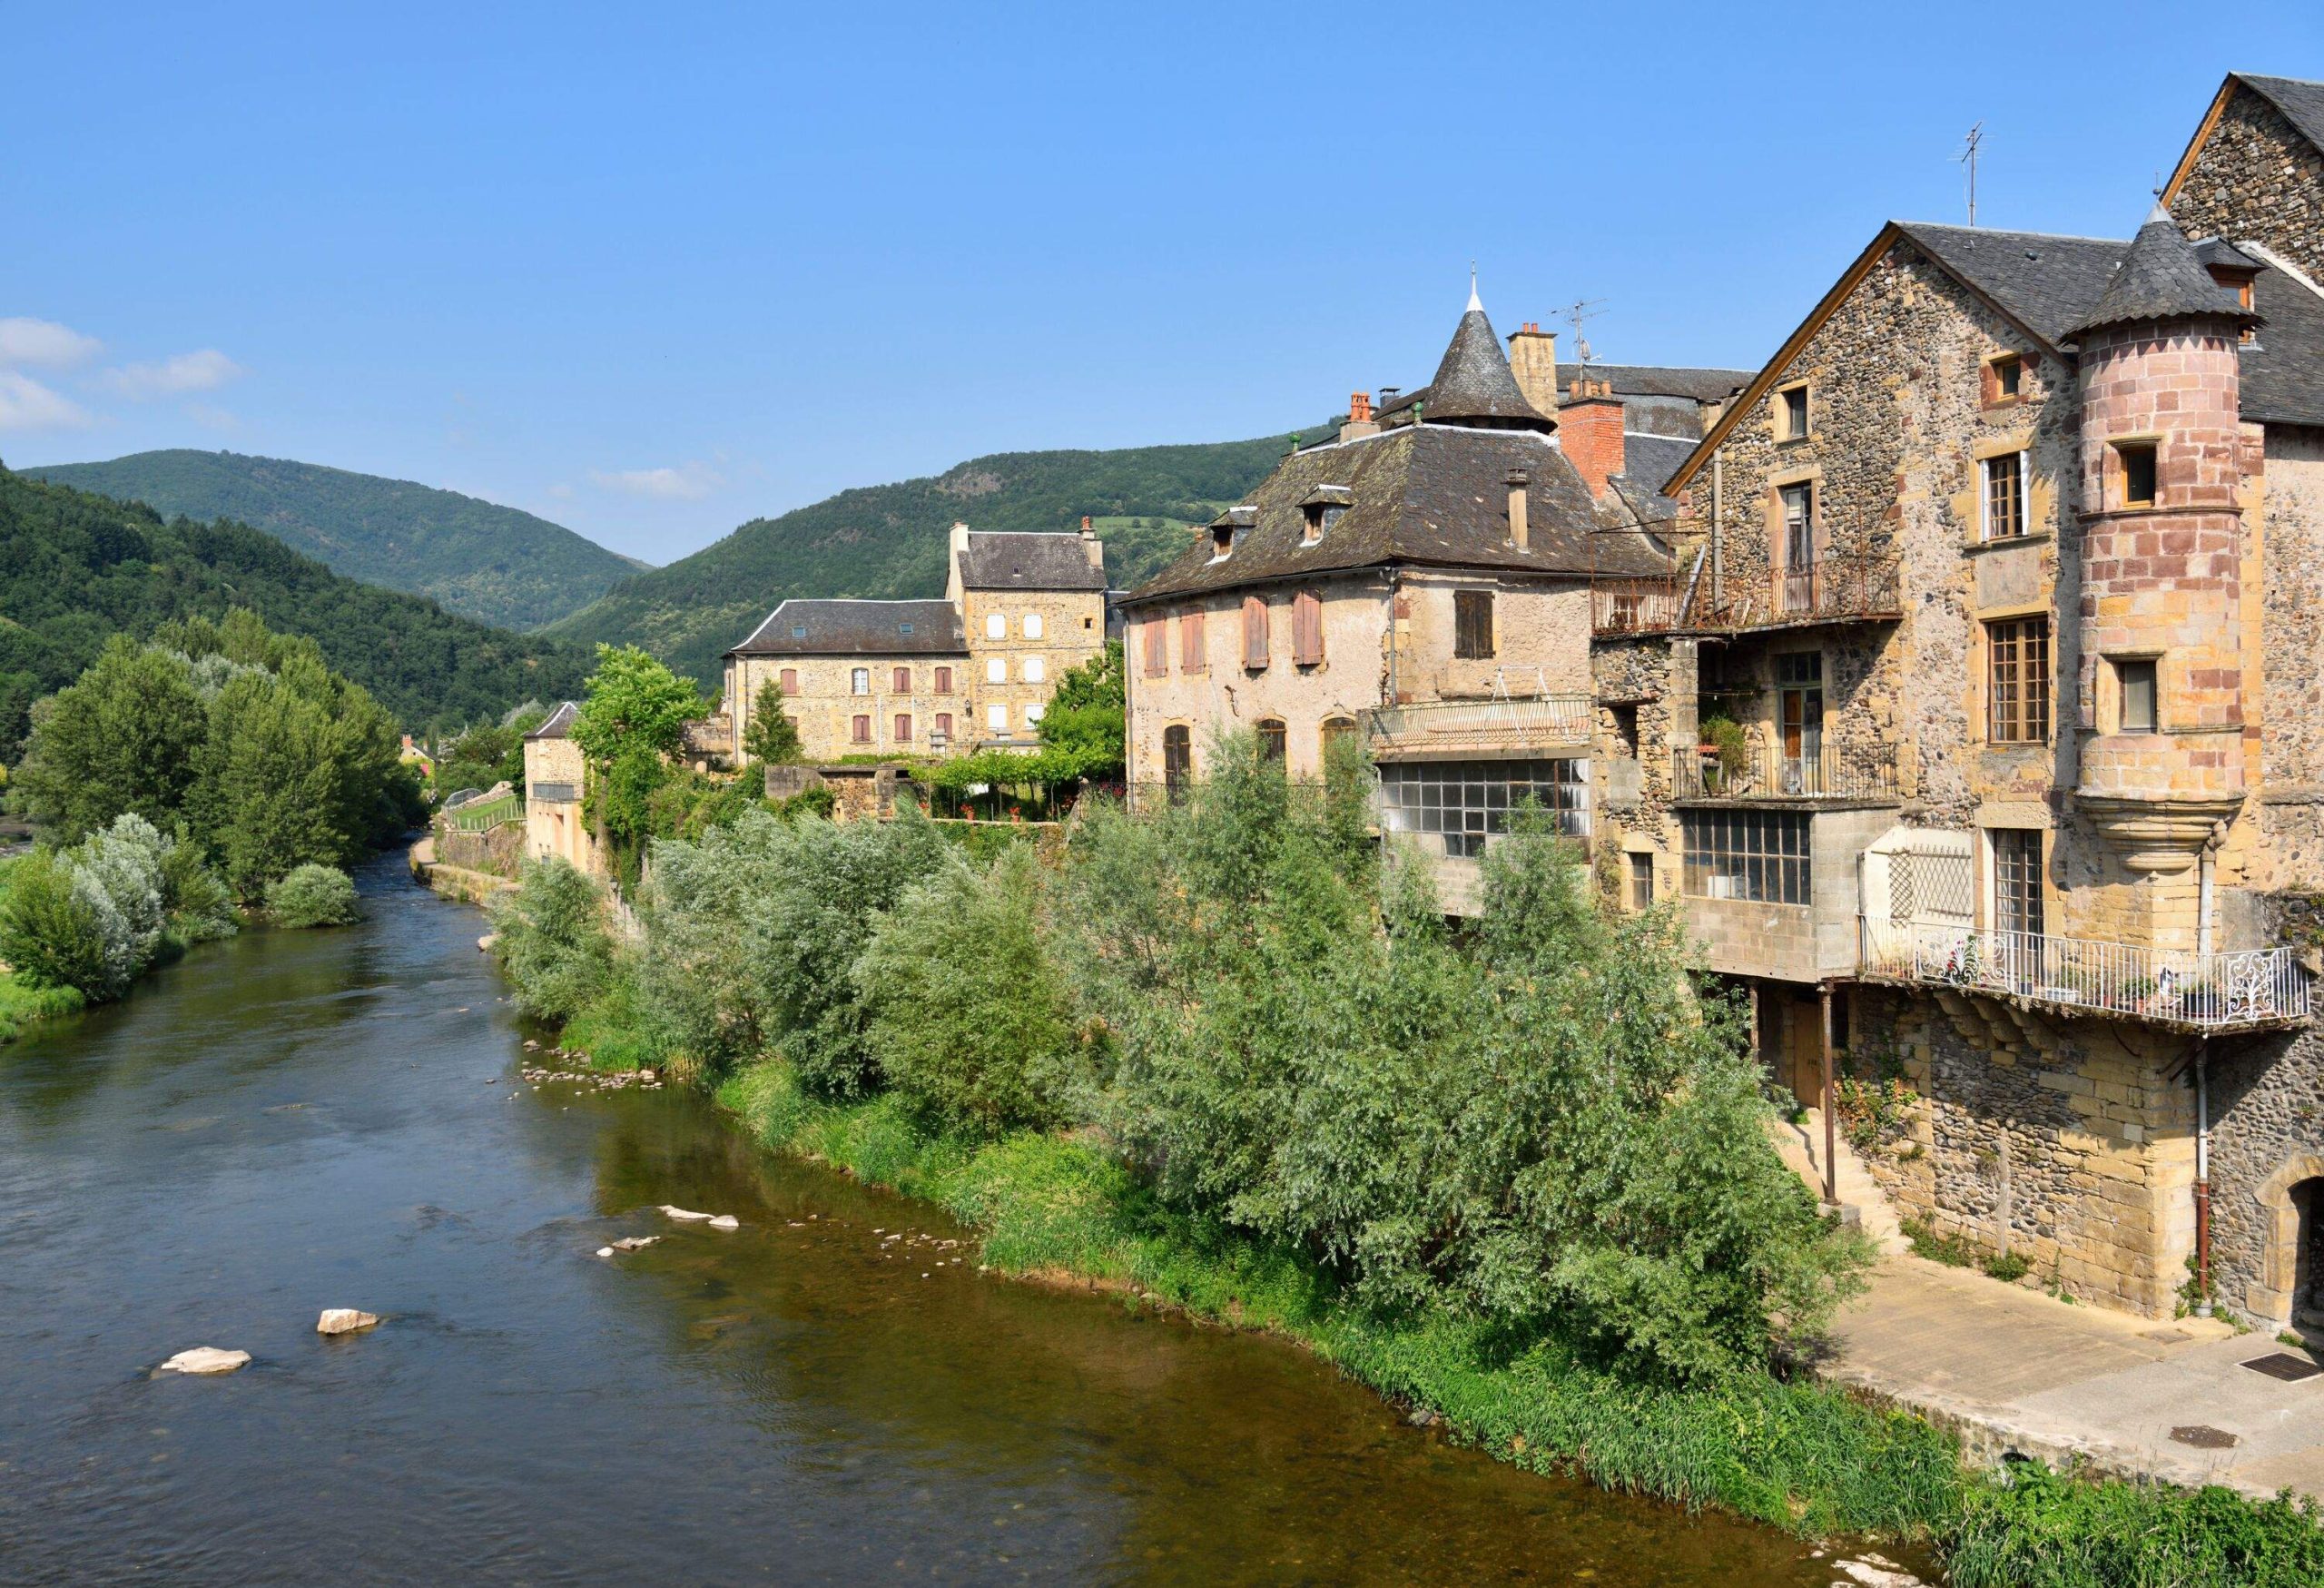 France, Aveyron, Saint-Geniez-d'Olt and Lot river